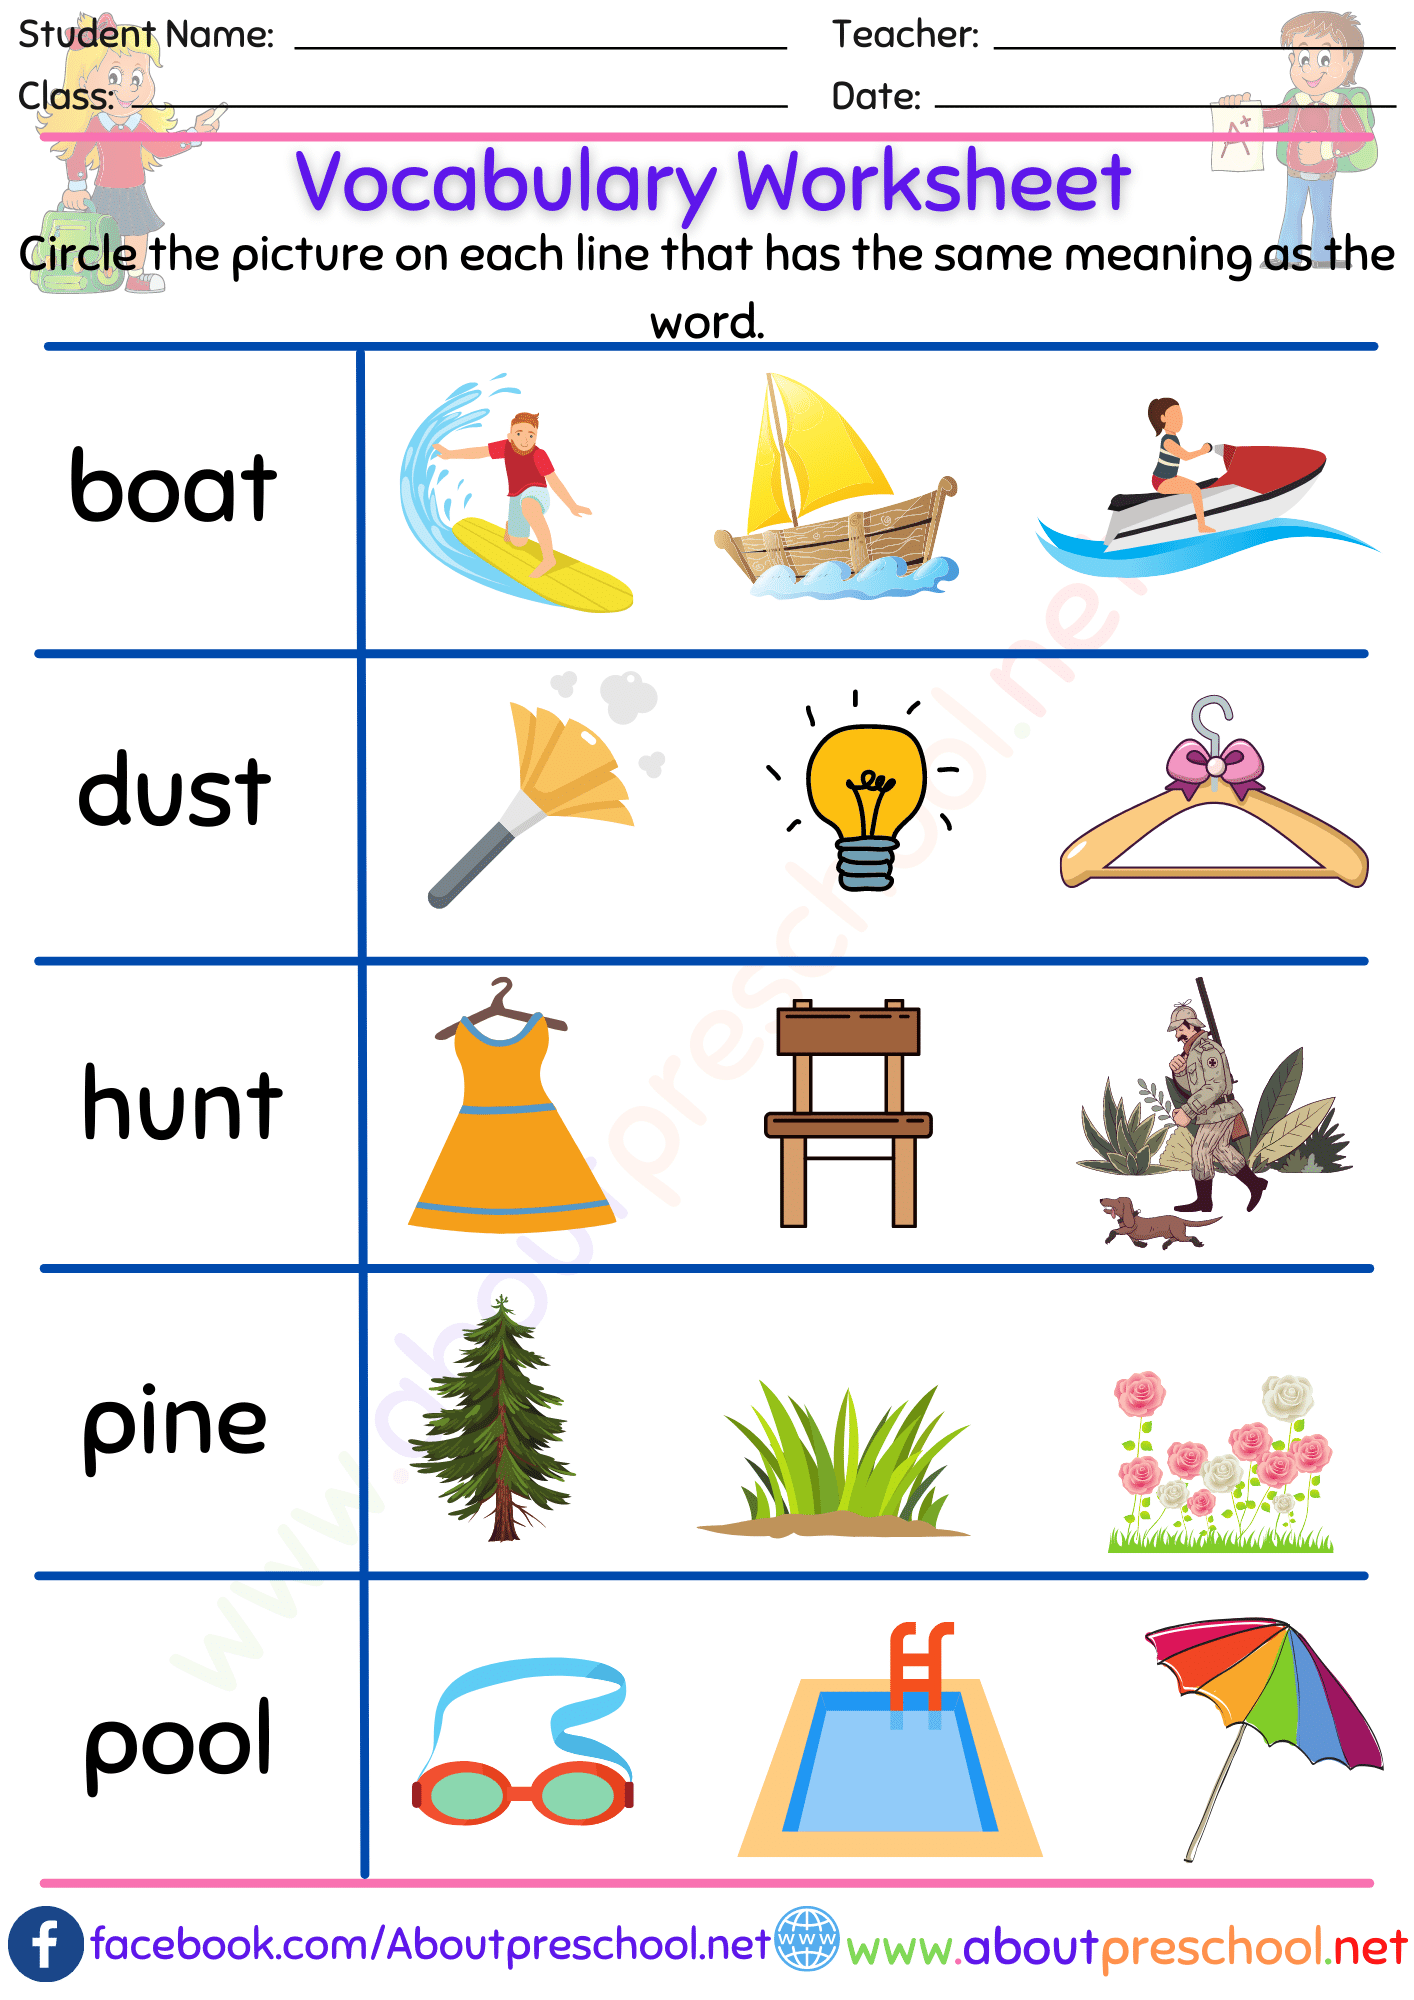 Vocabulary Worksheet-19